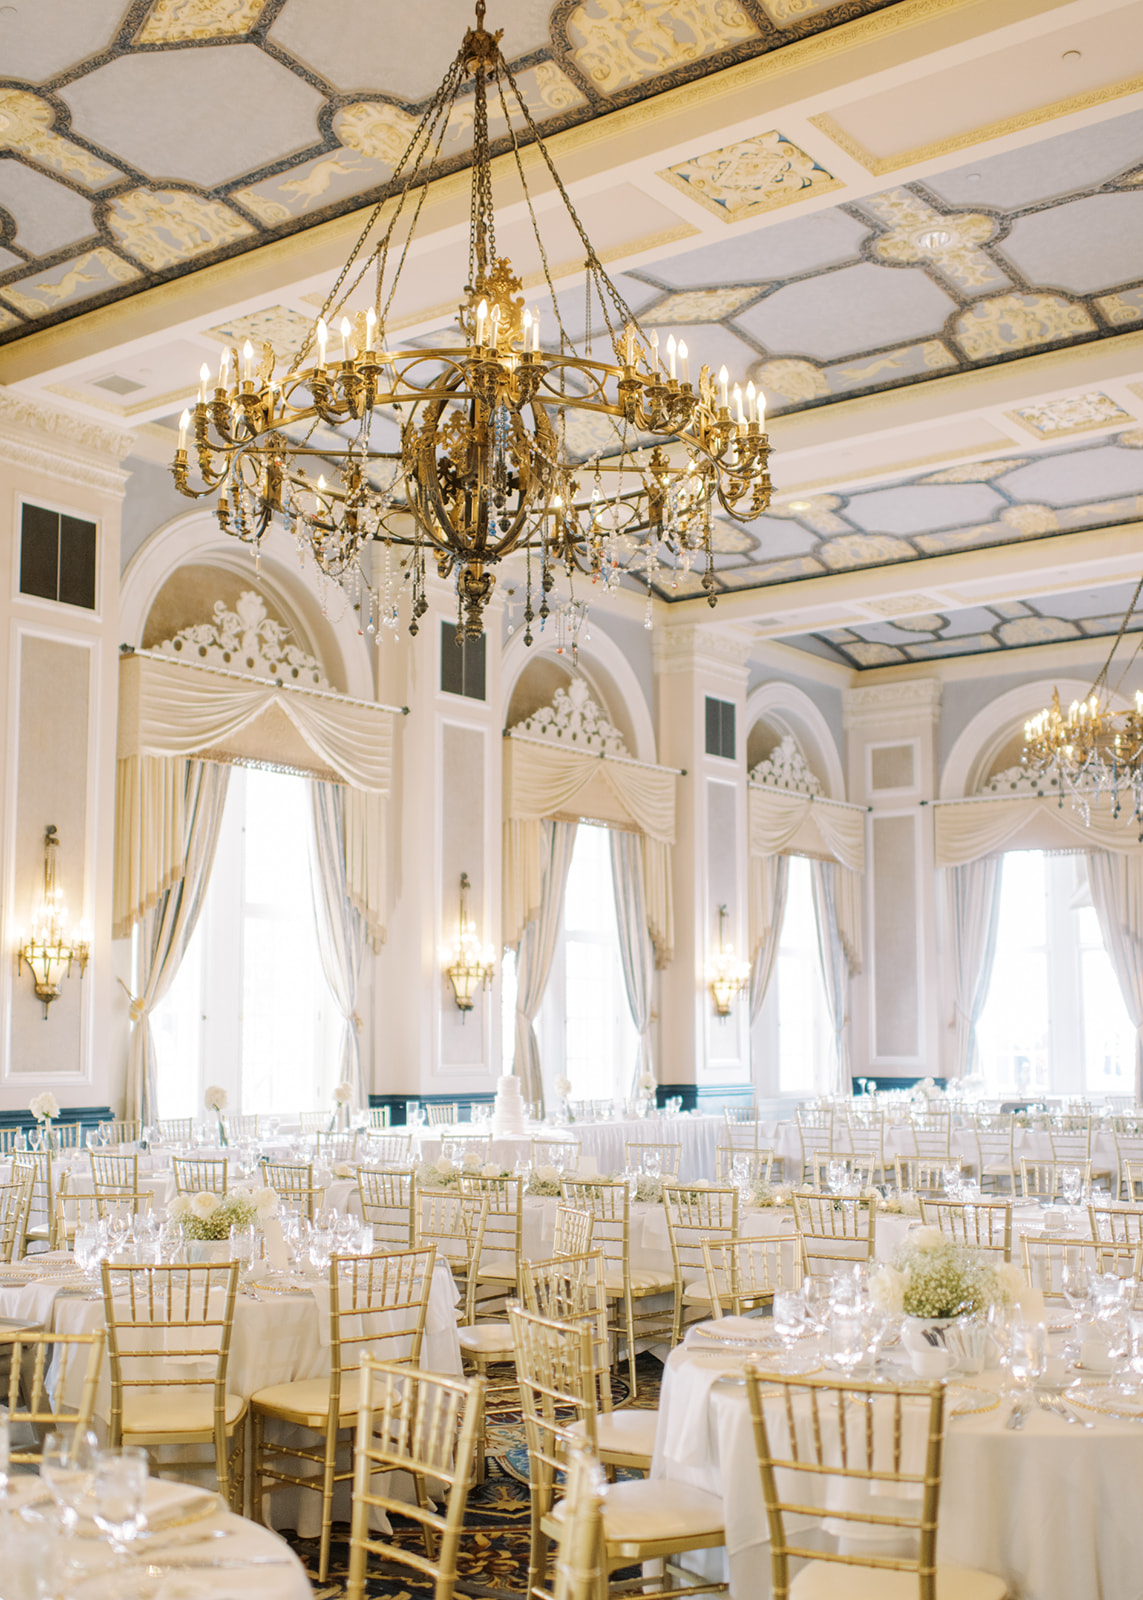 ballroom wedding with chandelier, luxe gold and white wedding, indoor ballroom reception